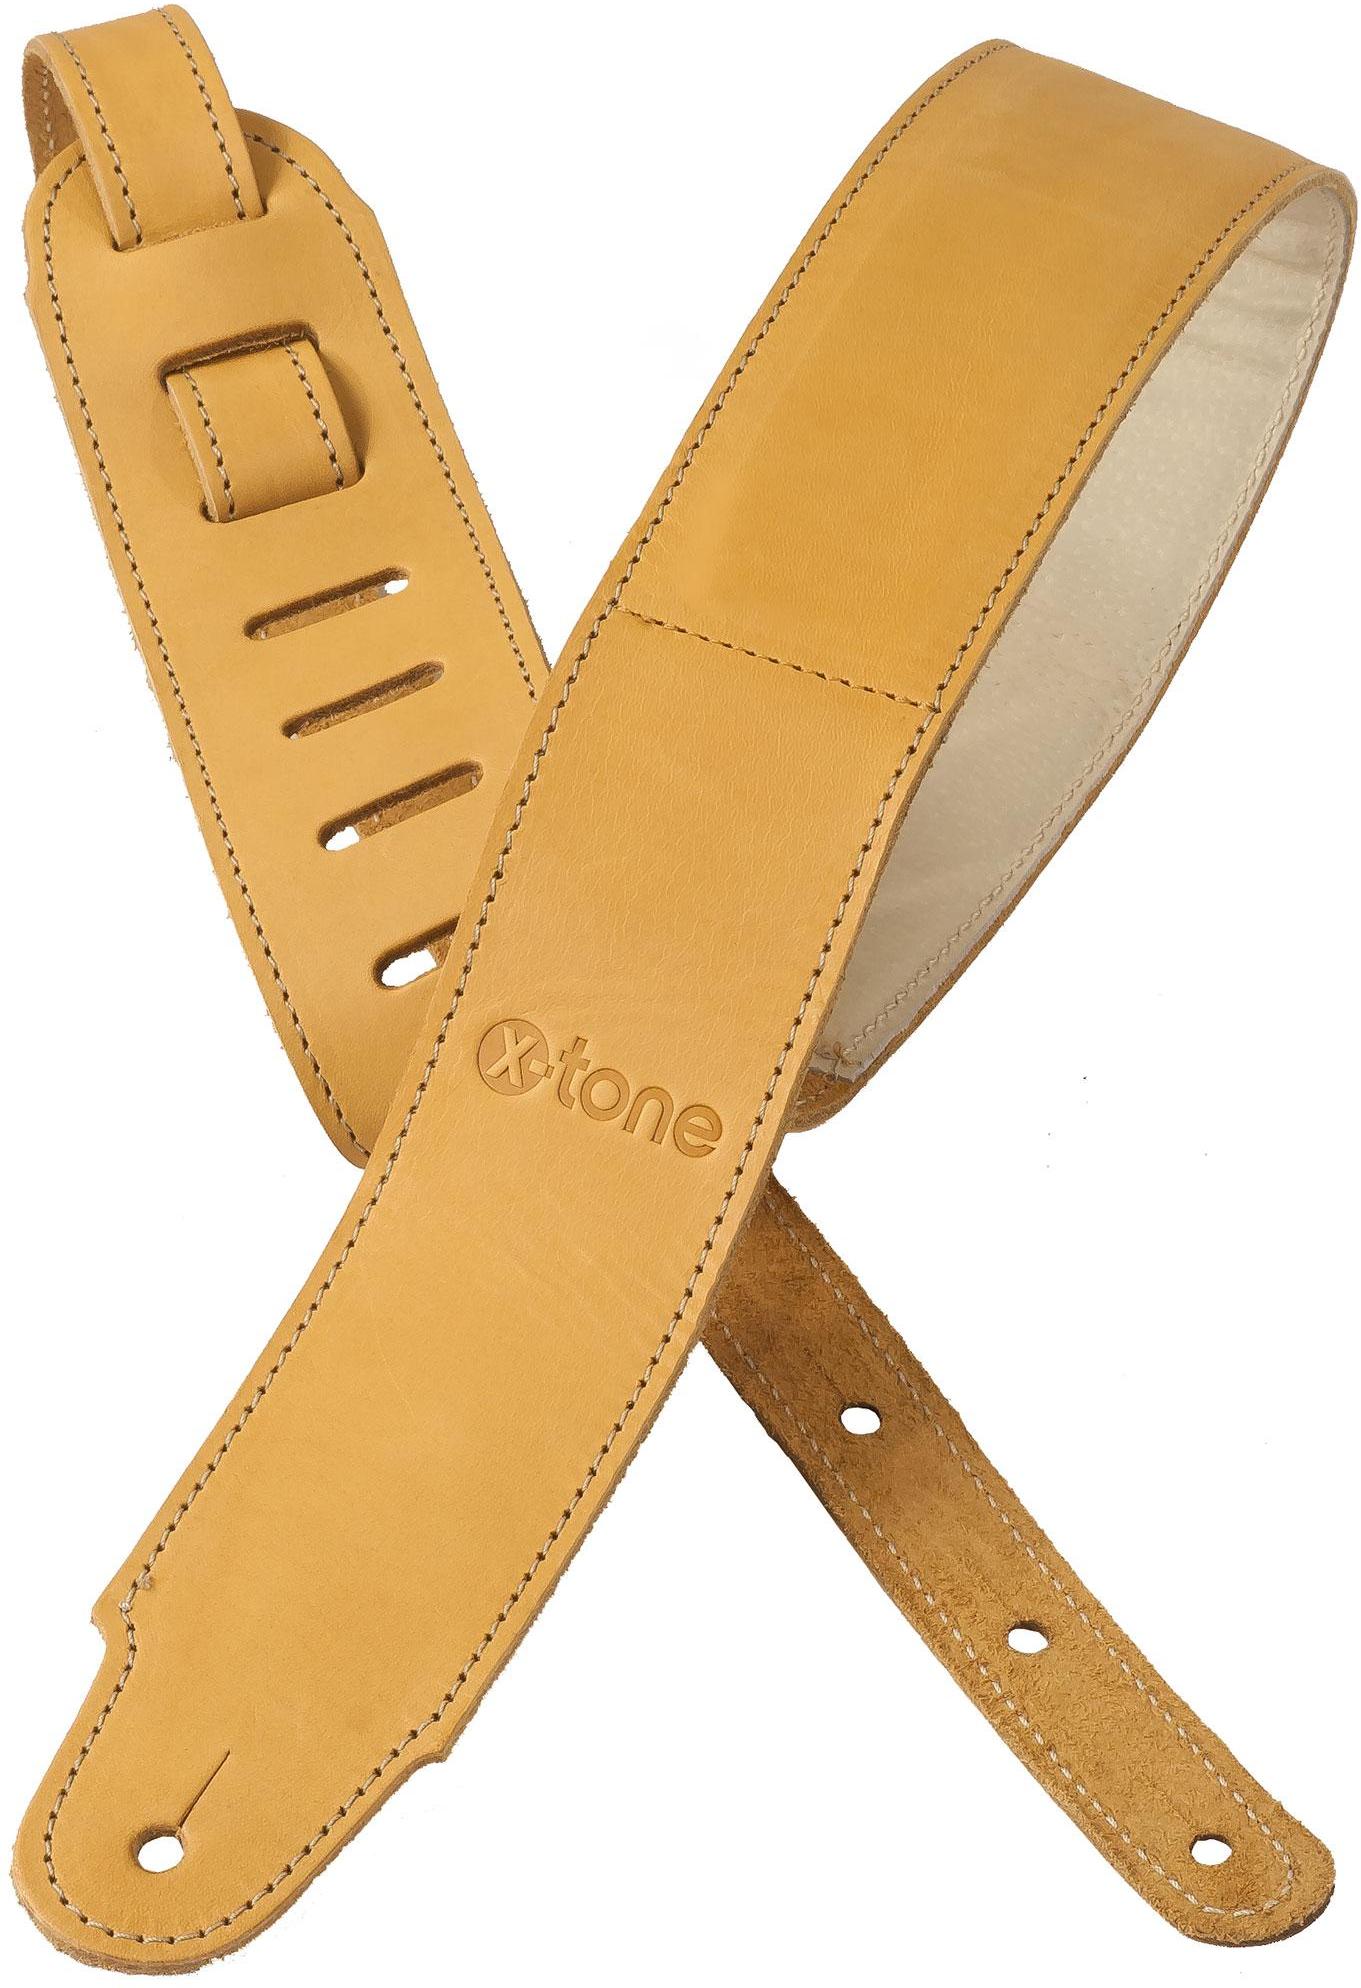 Guitar strap X-tone xg 3154 Plus Leather Guitar Strap - Brownstone Beige